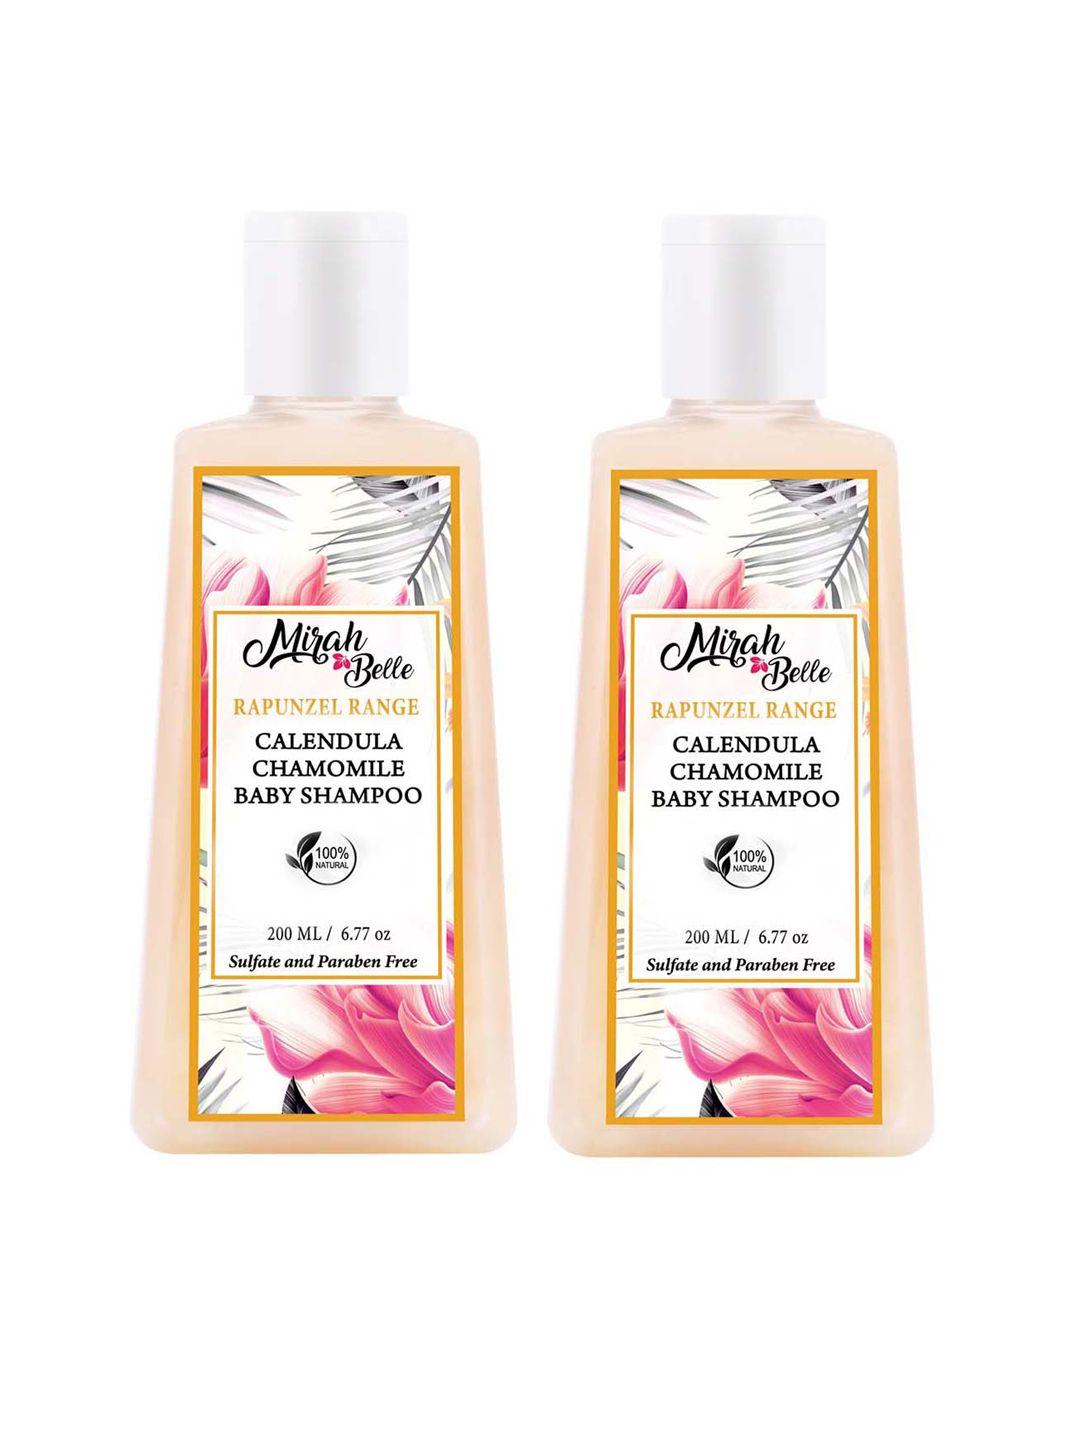 mirah belle set of 2 calendula - chamomile baby shampoo 400 ml